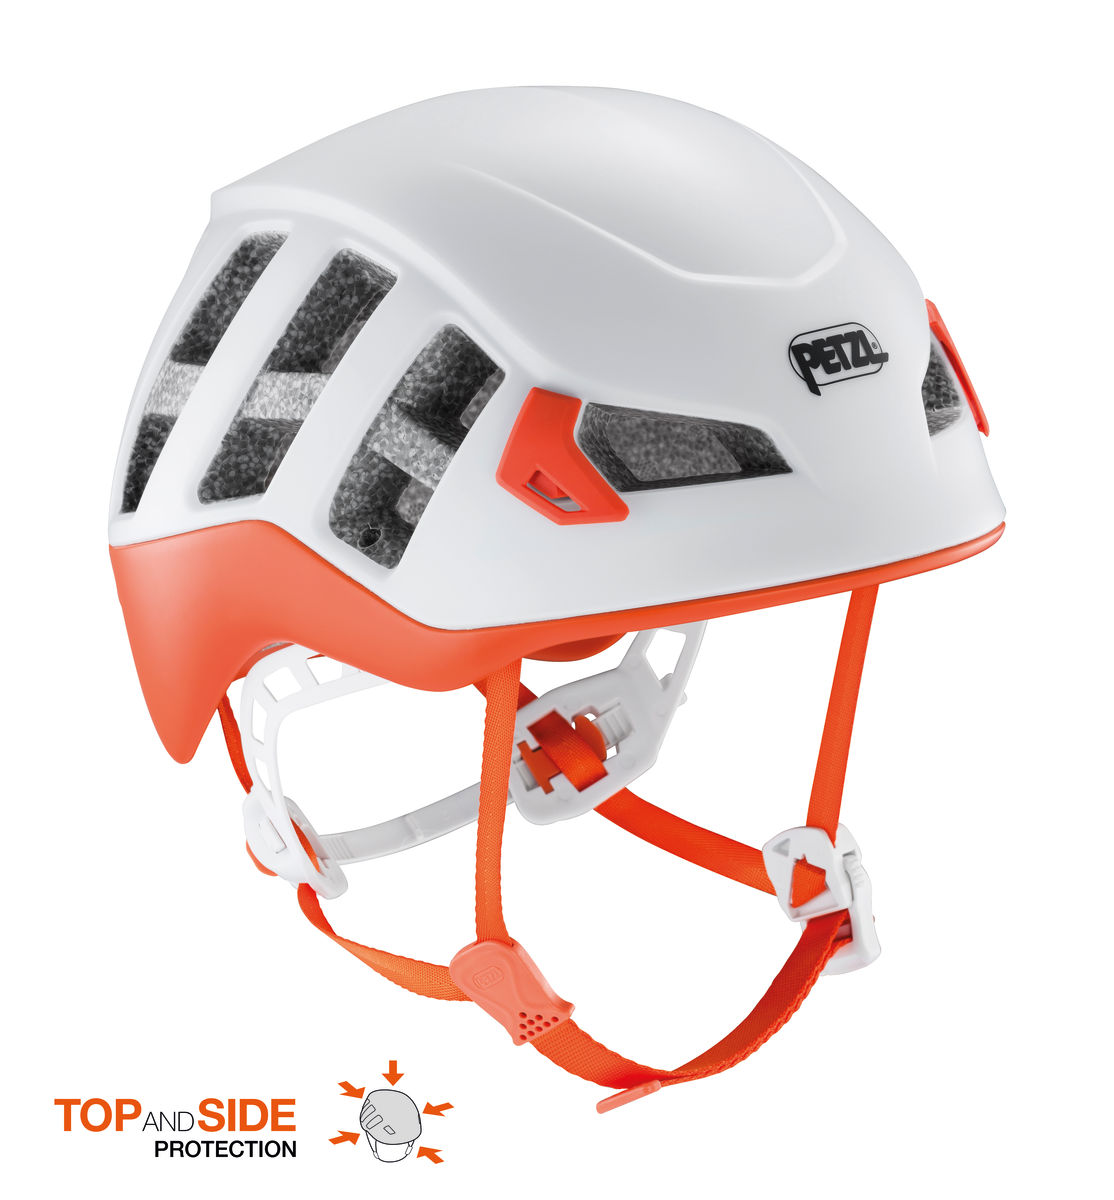 METEOR, Lightweight helmet for climbing, mountaineering, and ski 